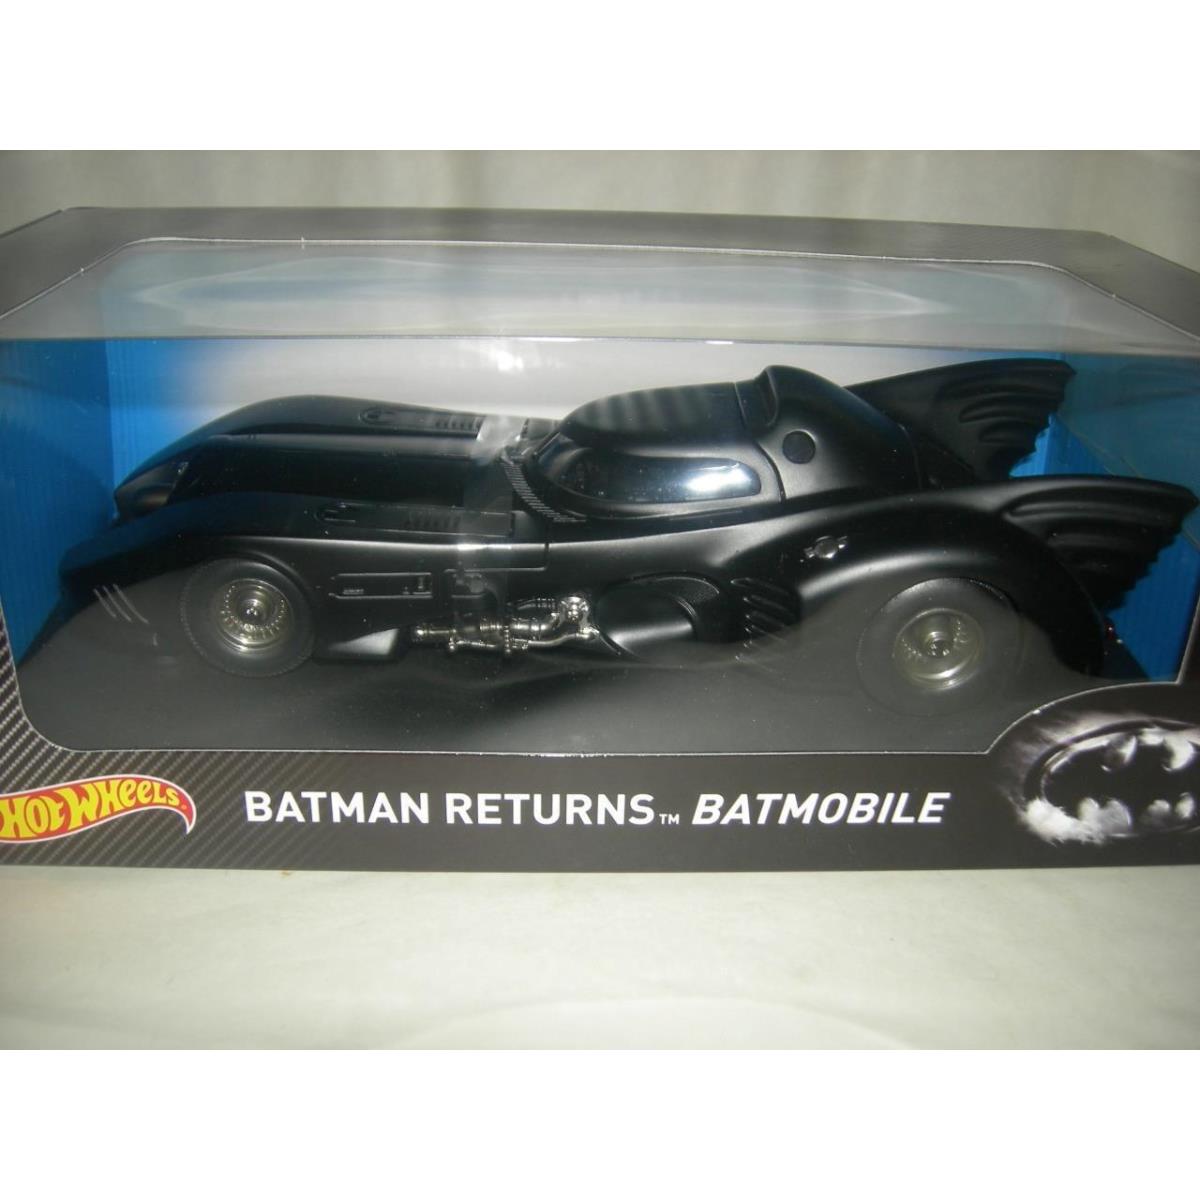 Batman Returns Batmobile CMC96 2015 Hot Wheels Un Opened Box 1:18 Scale